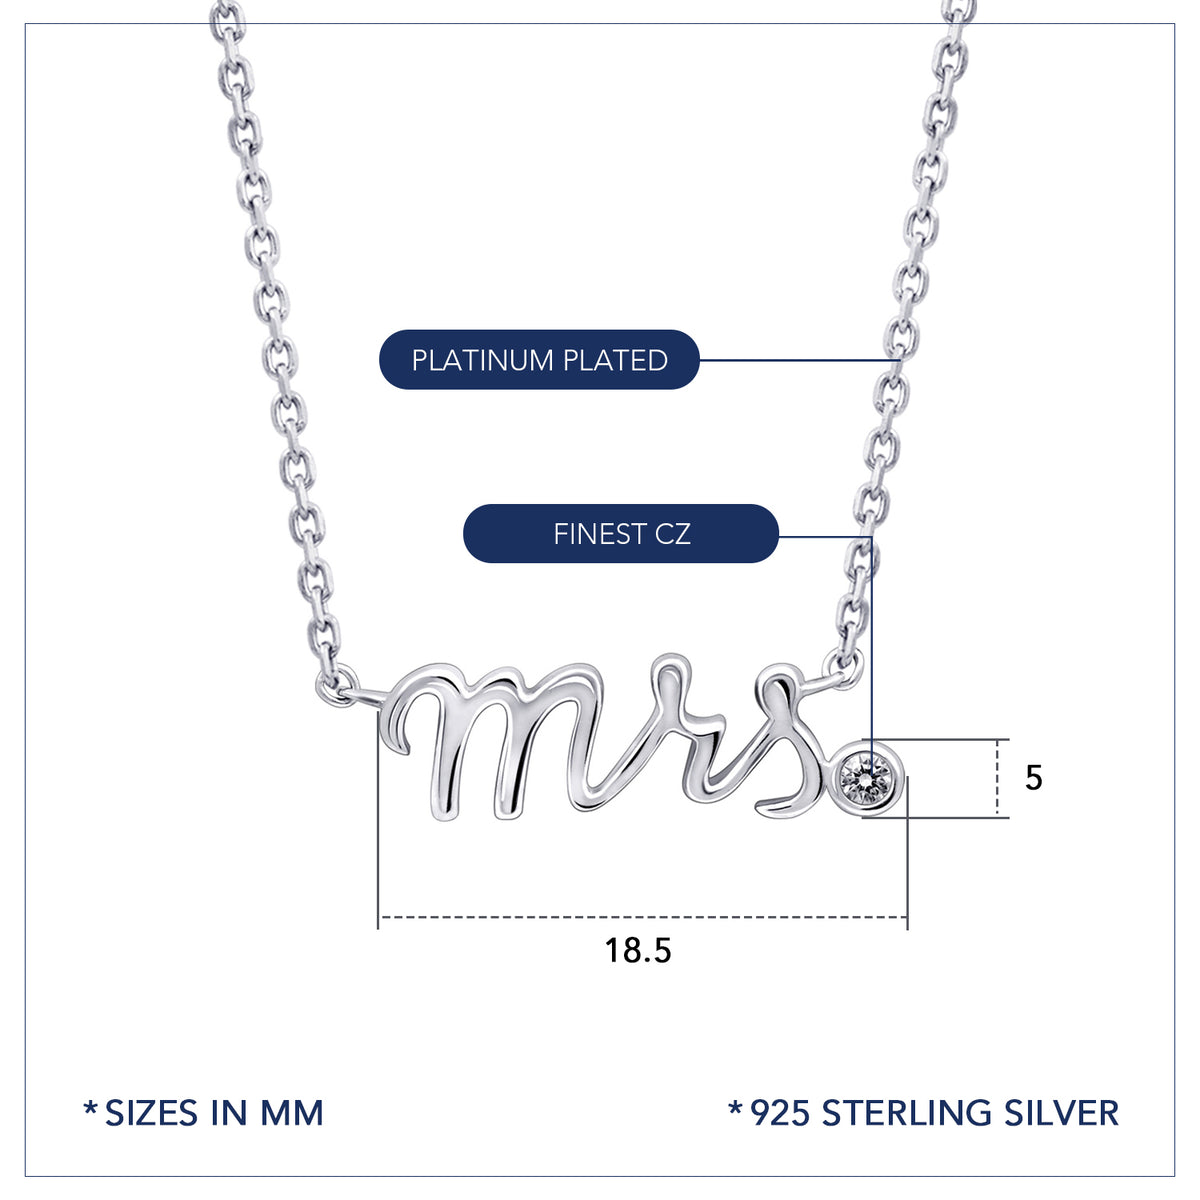 Mini "Mrs." Pendant Necklace